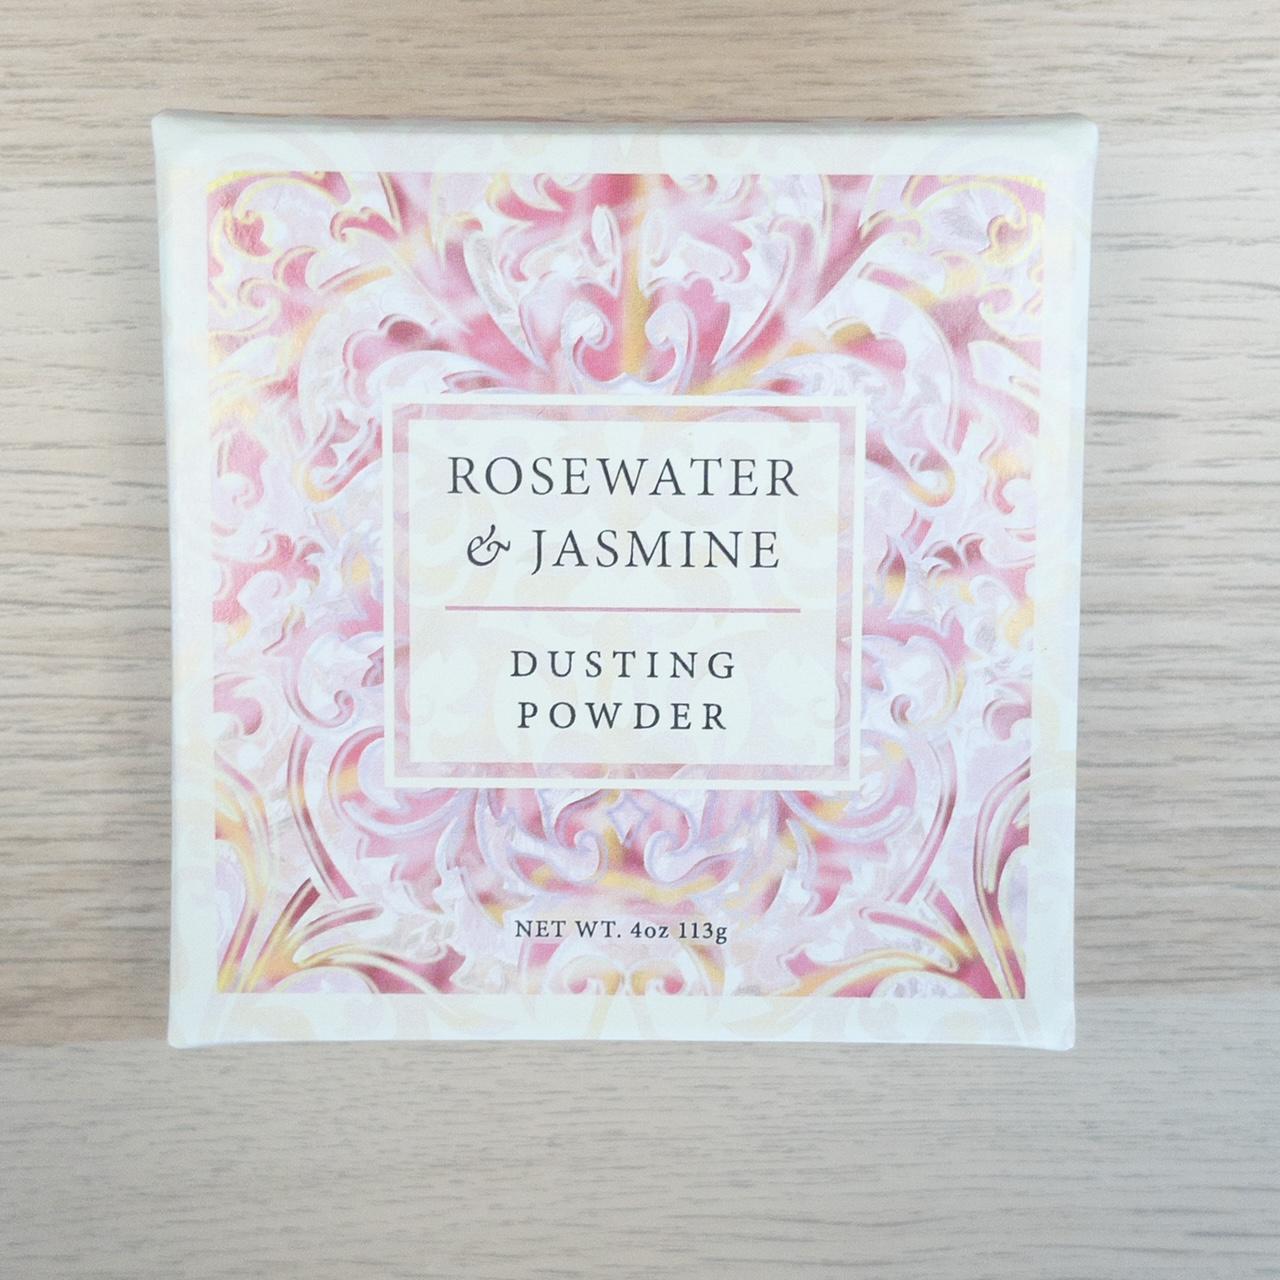 Rosewater Jasmine Dusting Powder